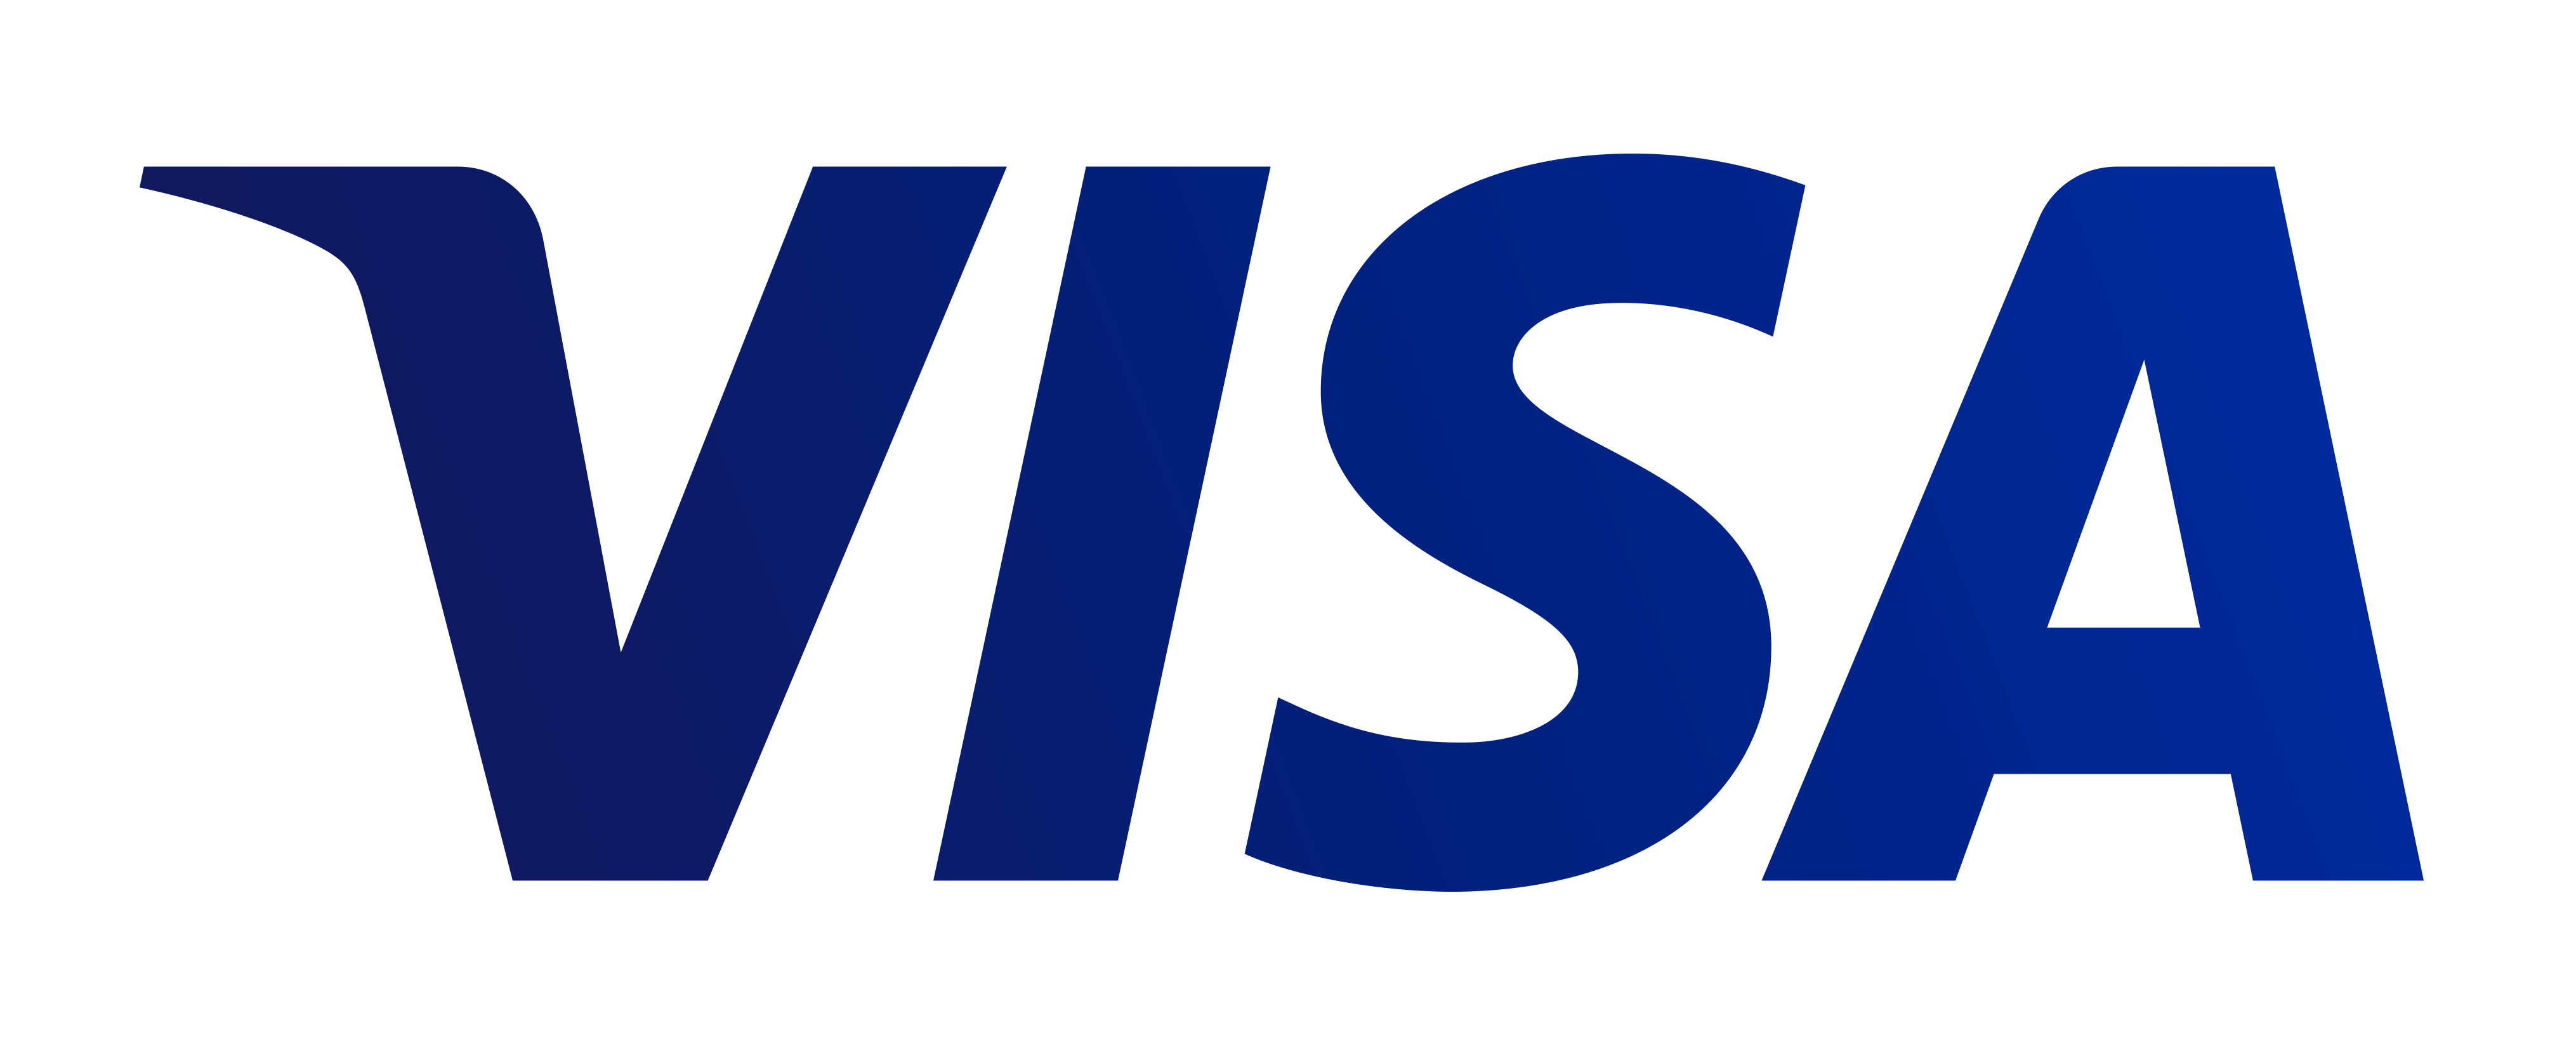 VisaCyberSource